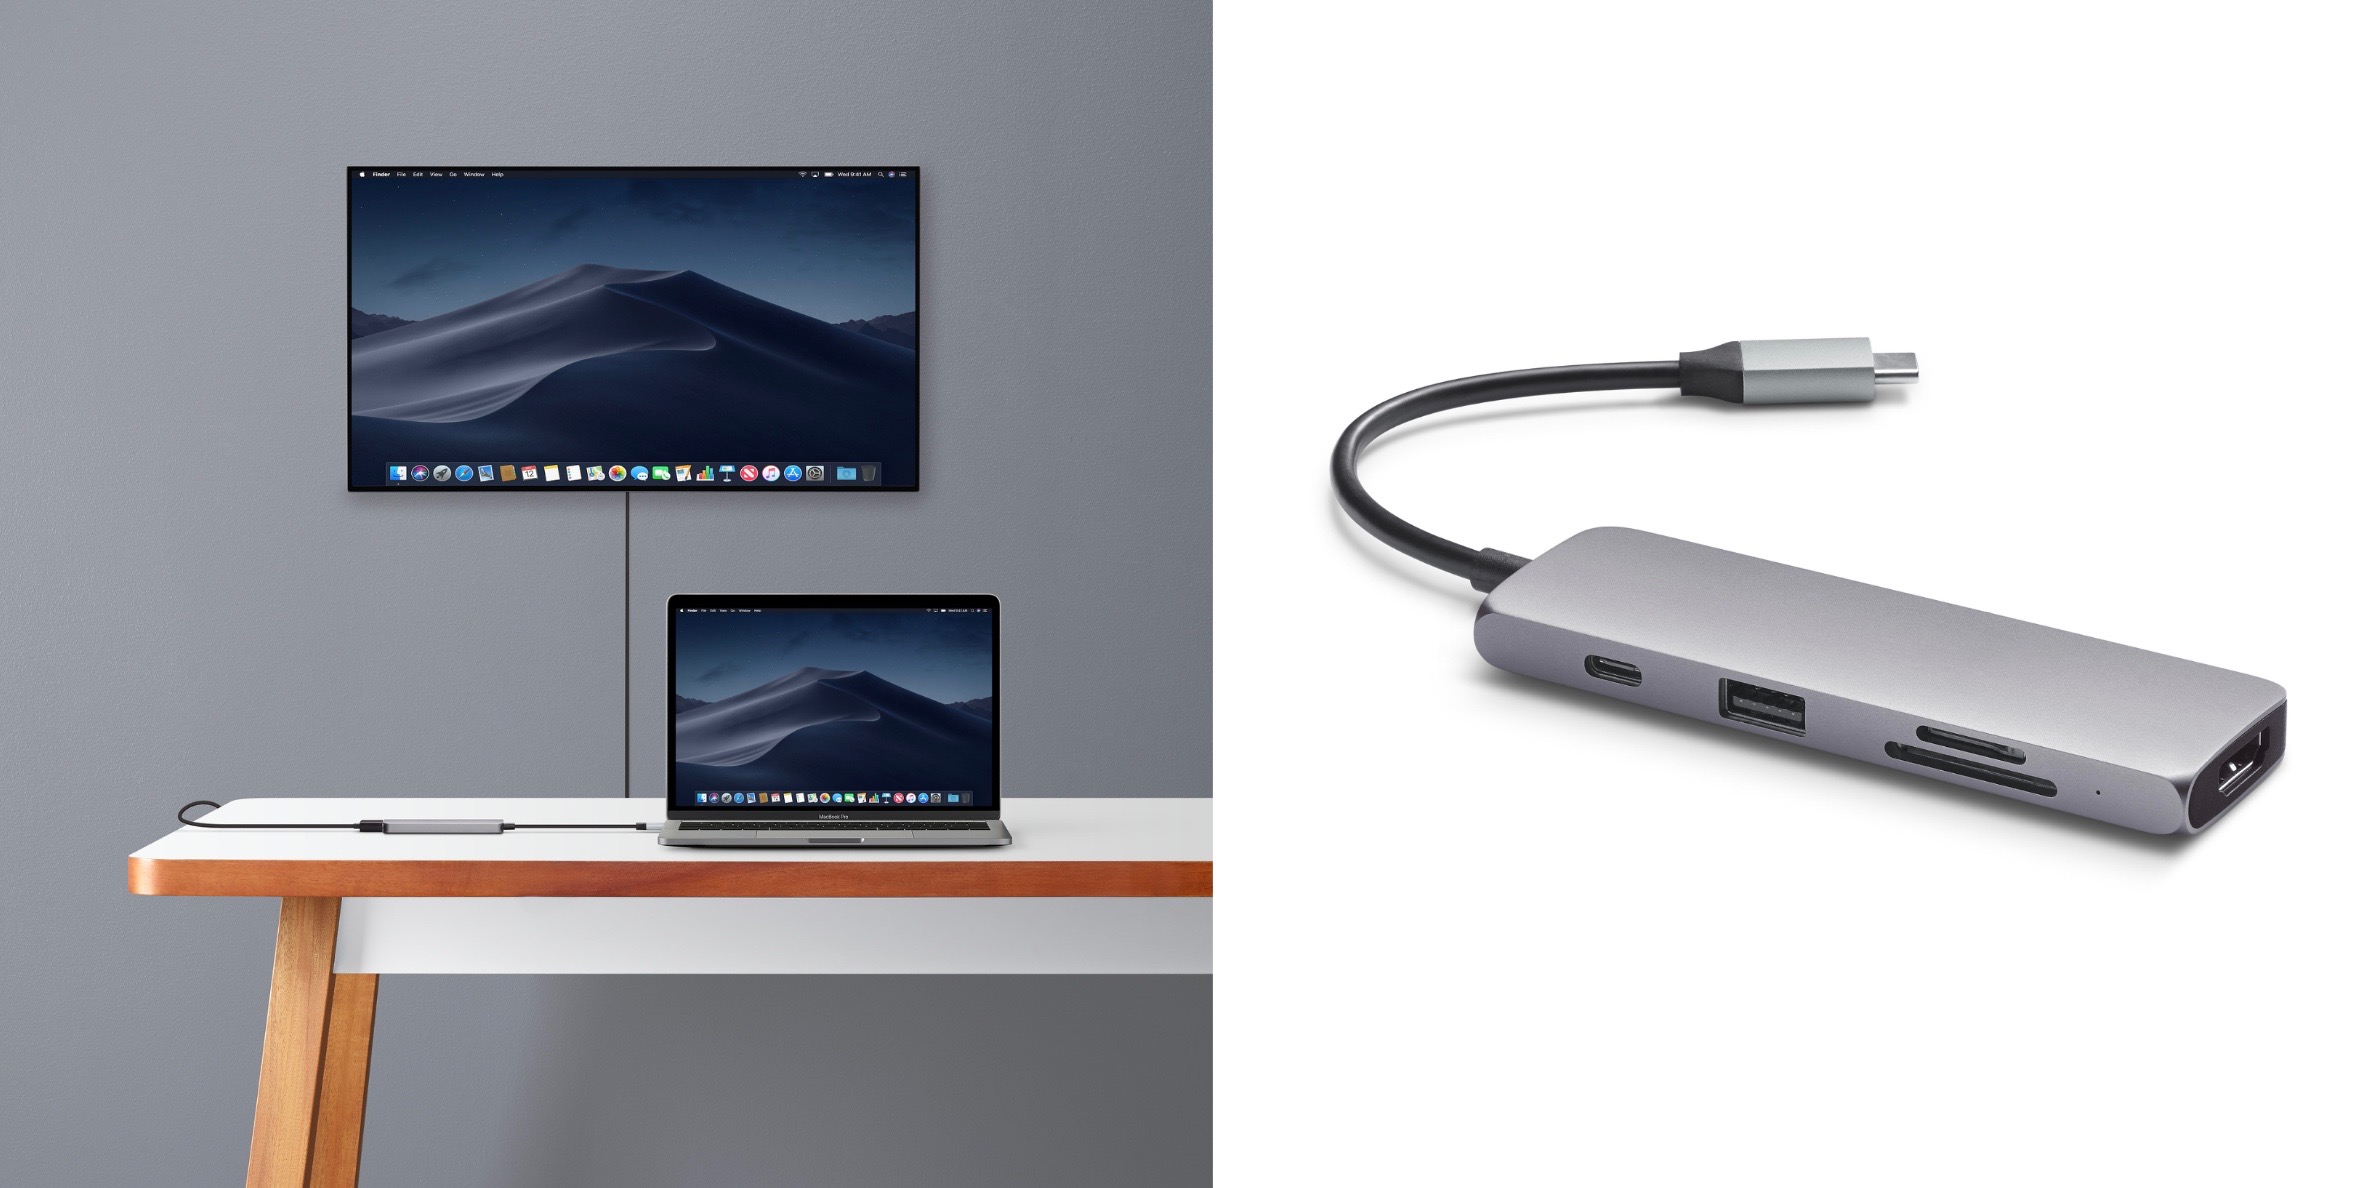 Satechi USB-A to USB-C adapter - transform your standard USB port